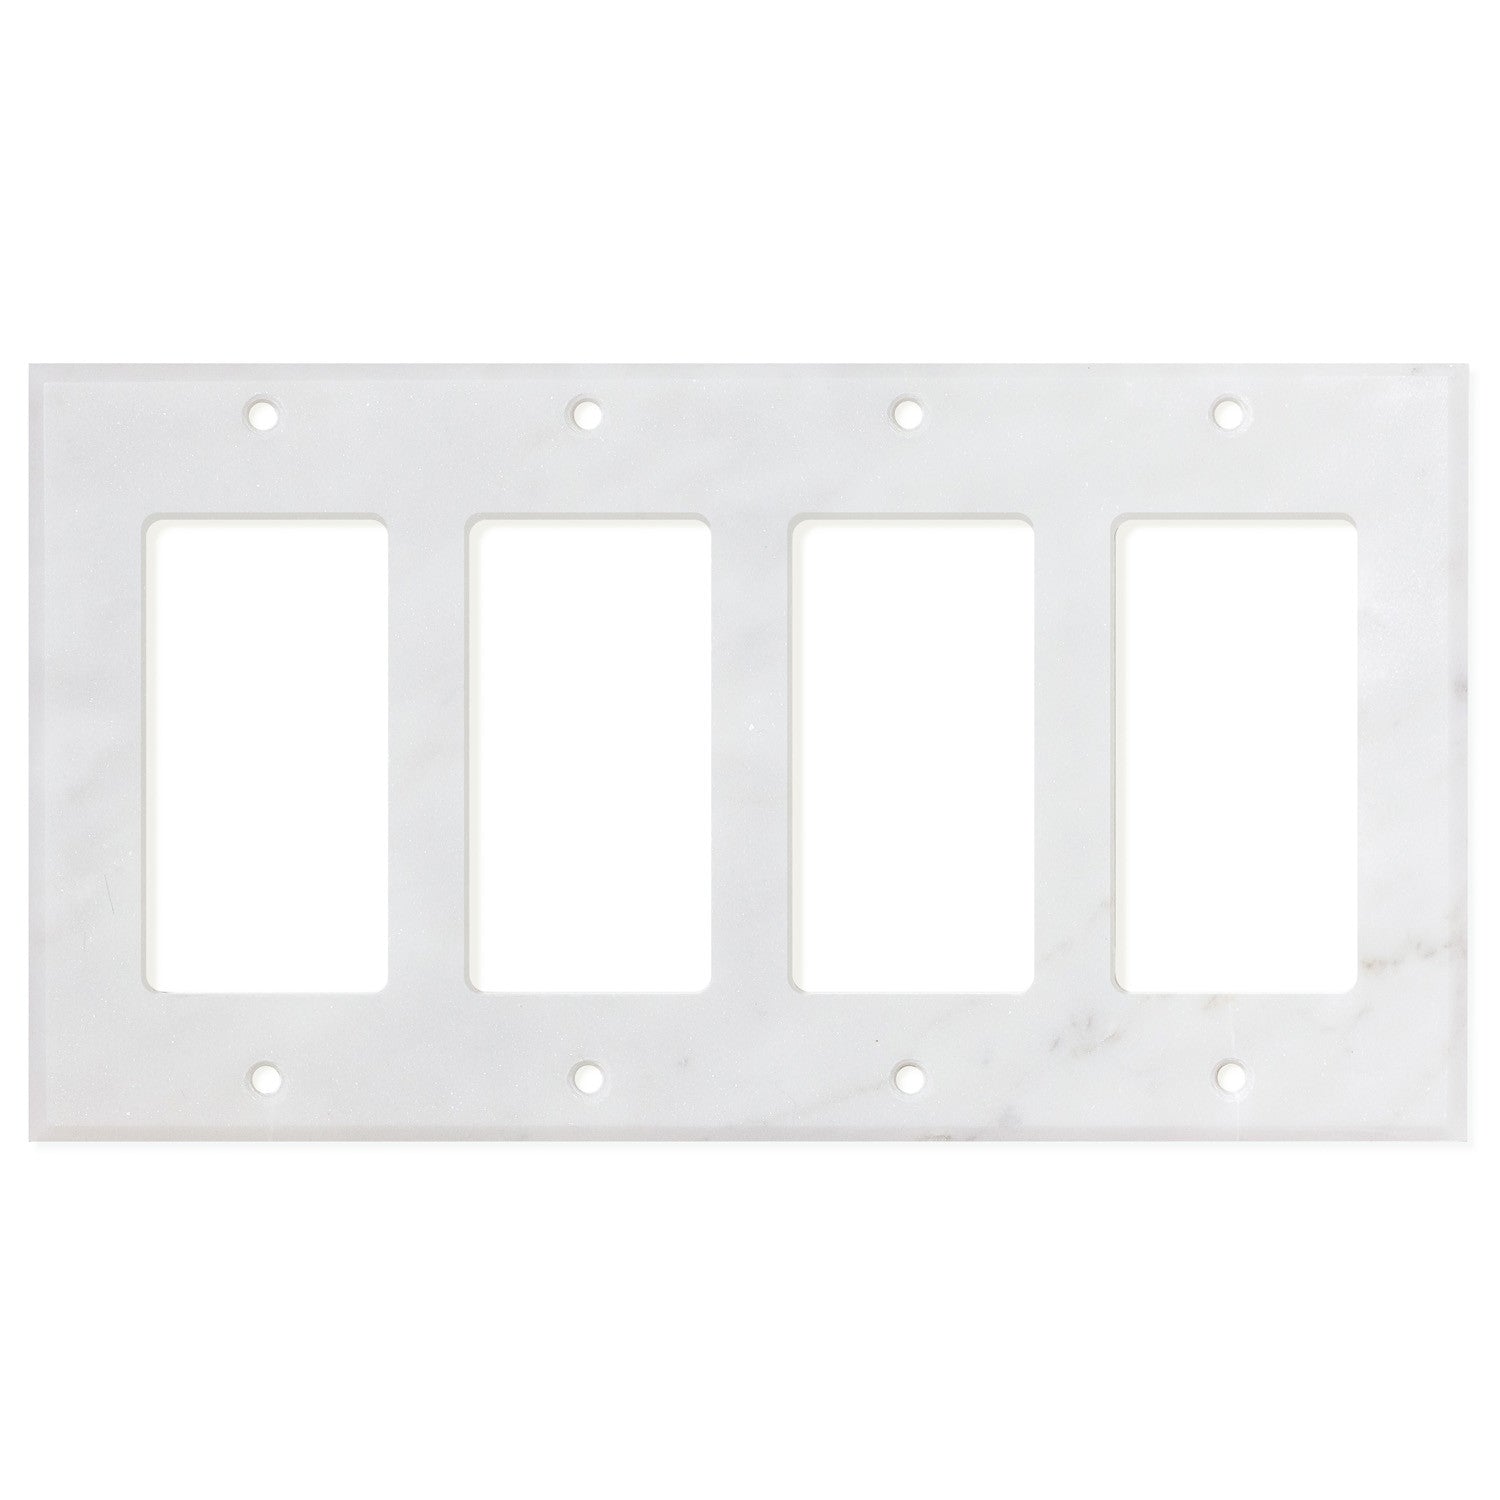 Bianco Carrara (Carrara White) Marble Switch Plate Cover, Honed (4 ROCKER) - Tilephile